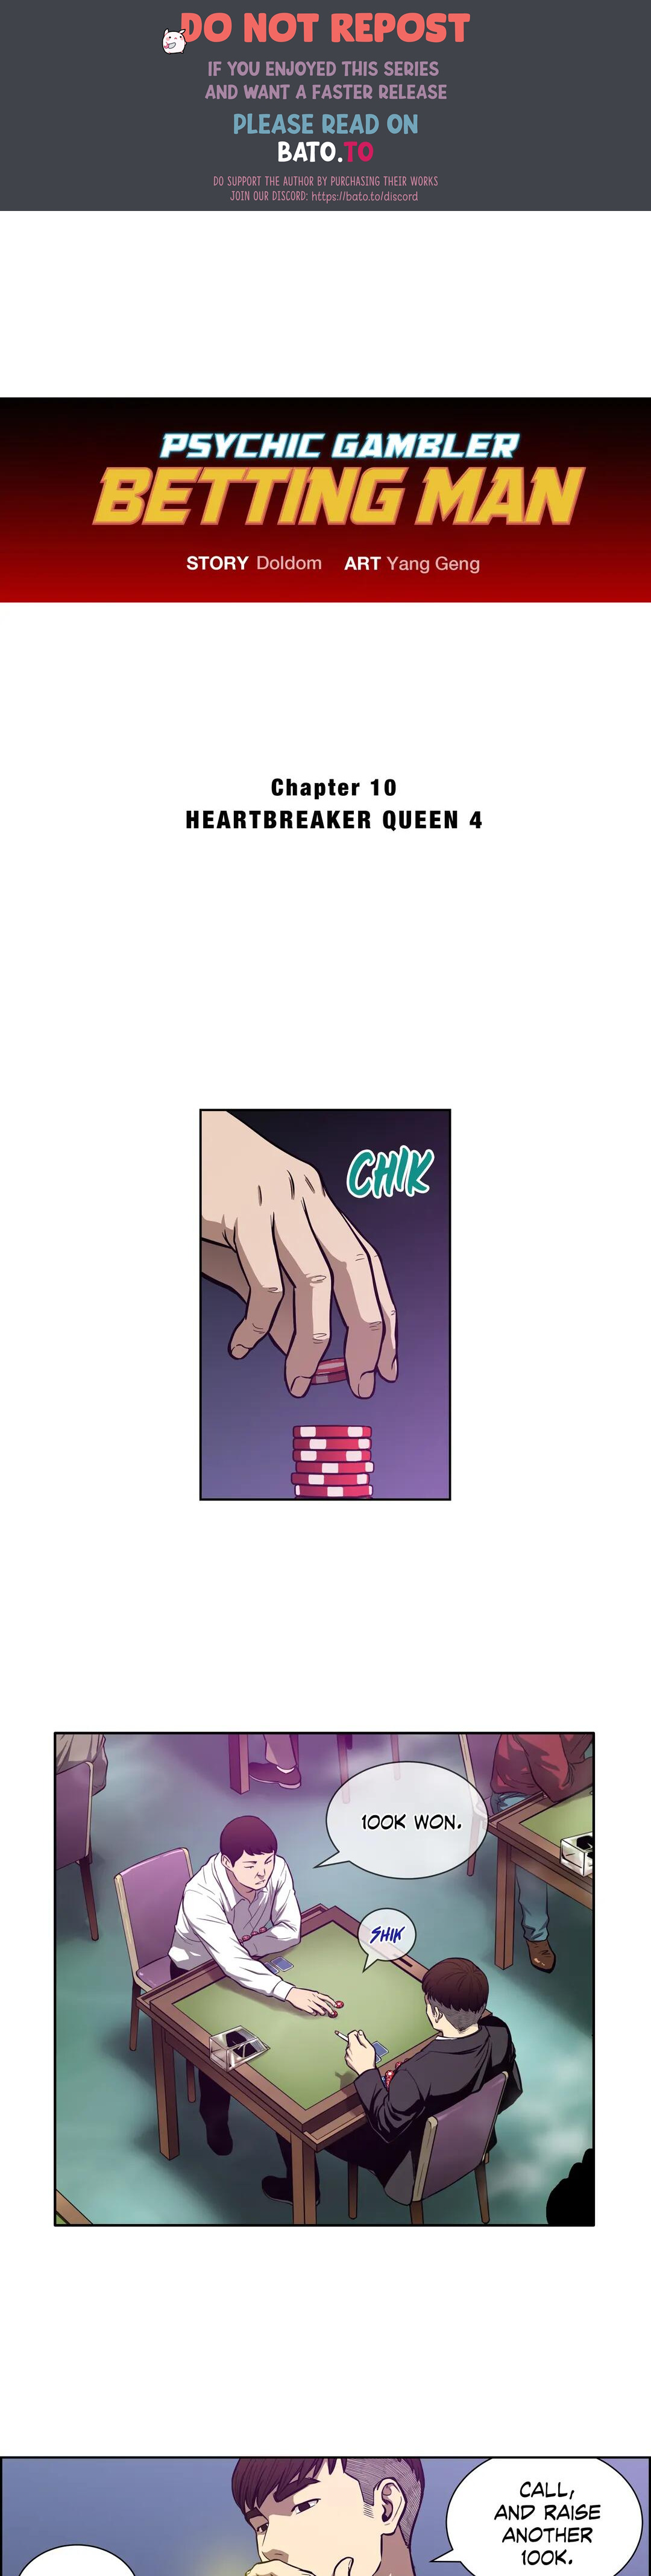 Psychic Gambler: Betting Man - Page 1